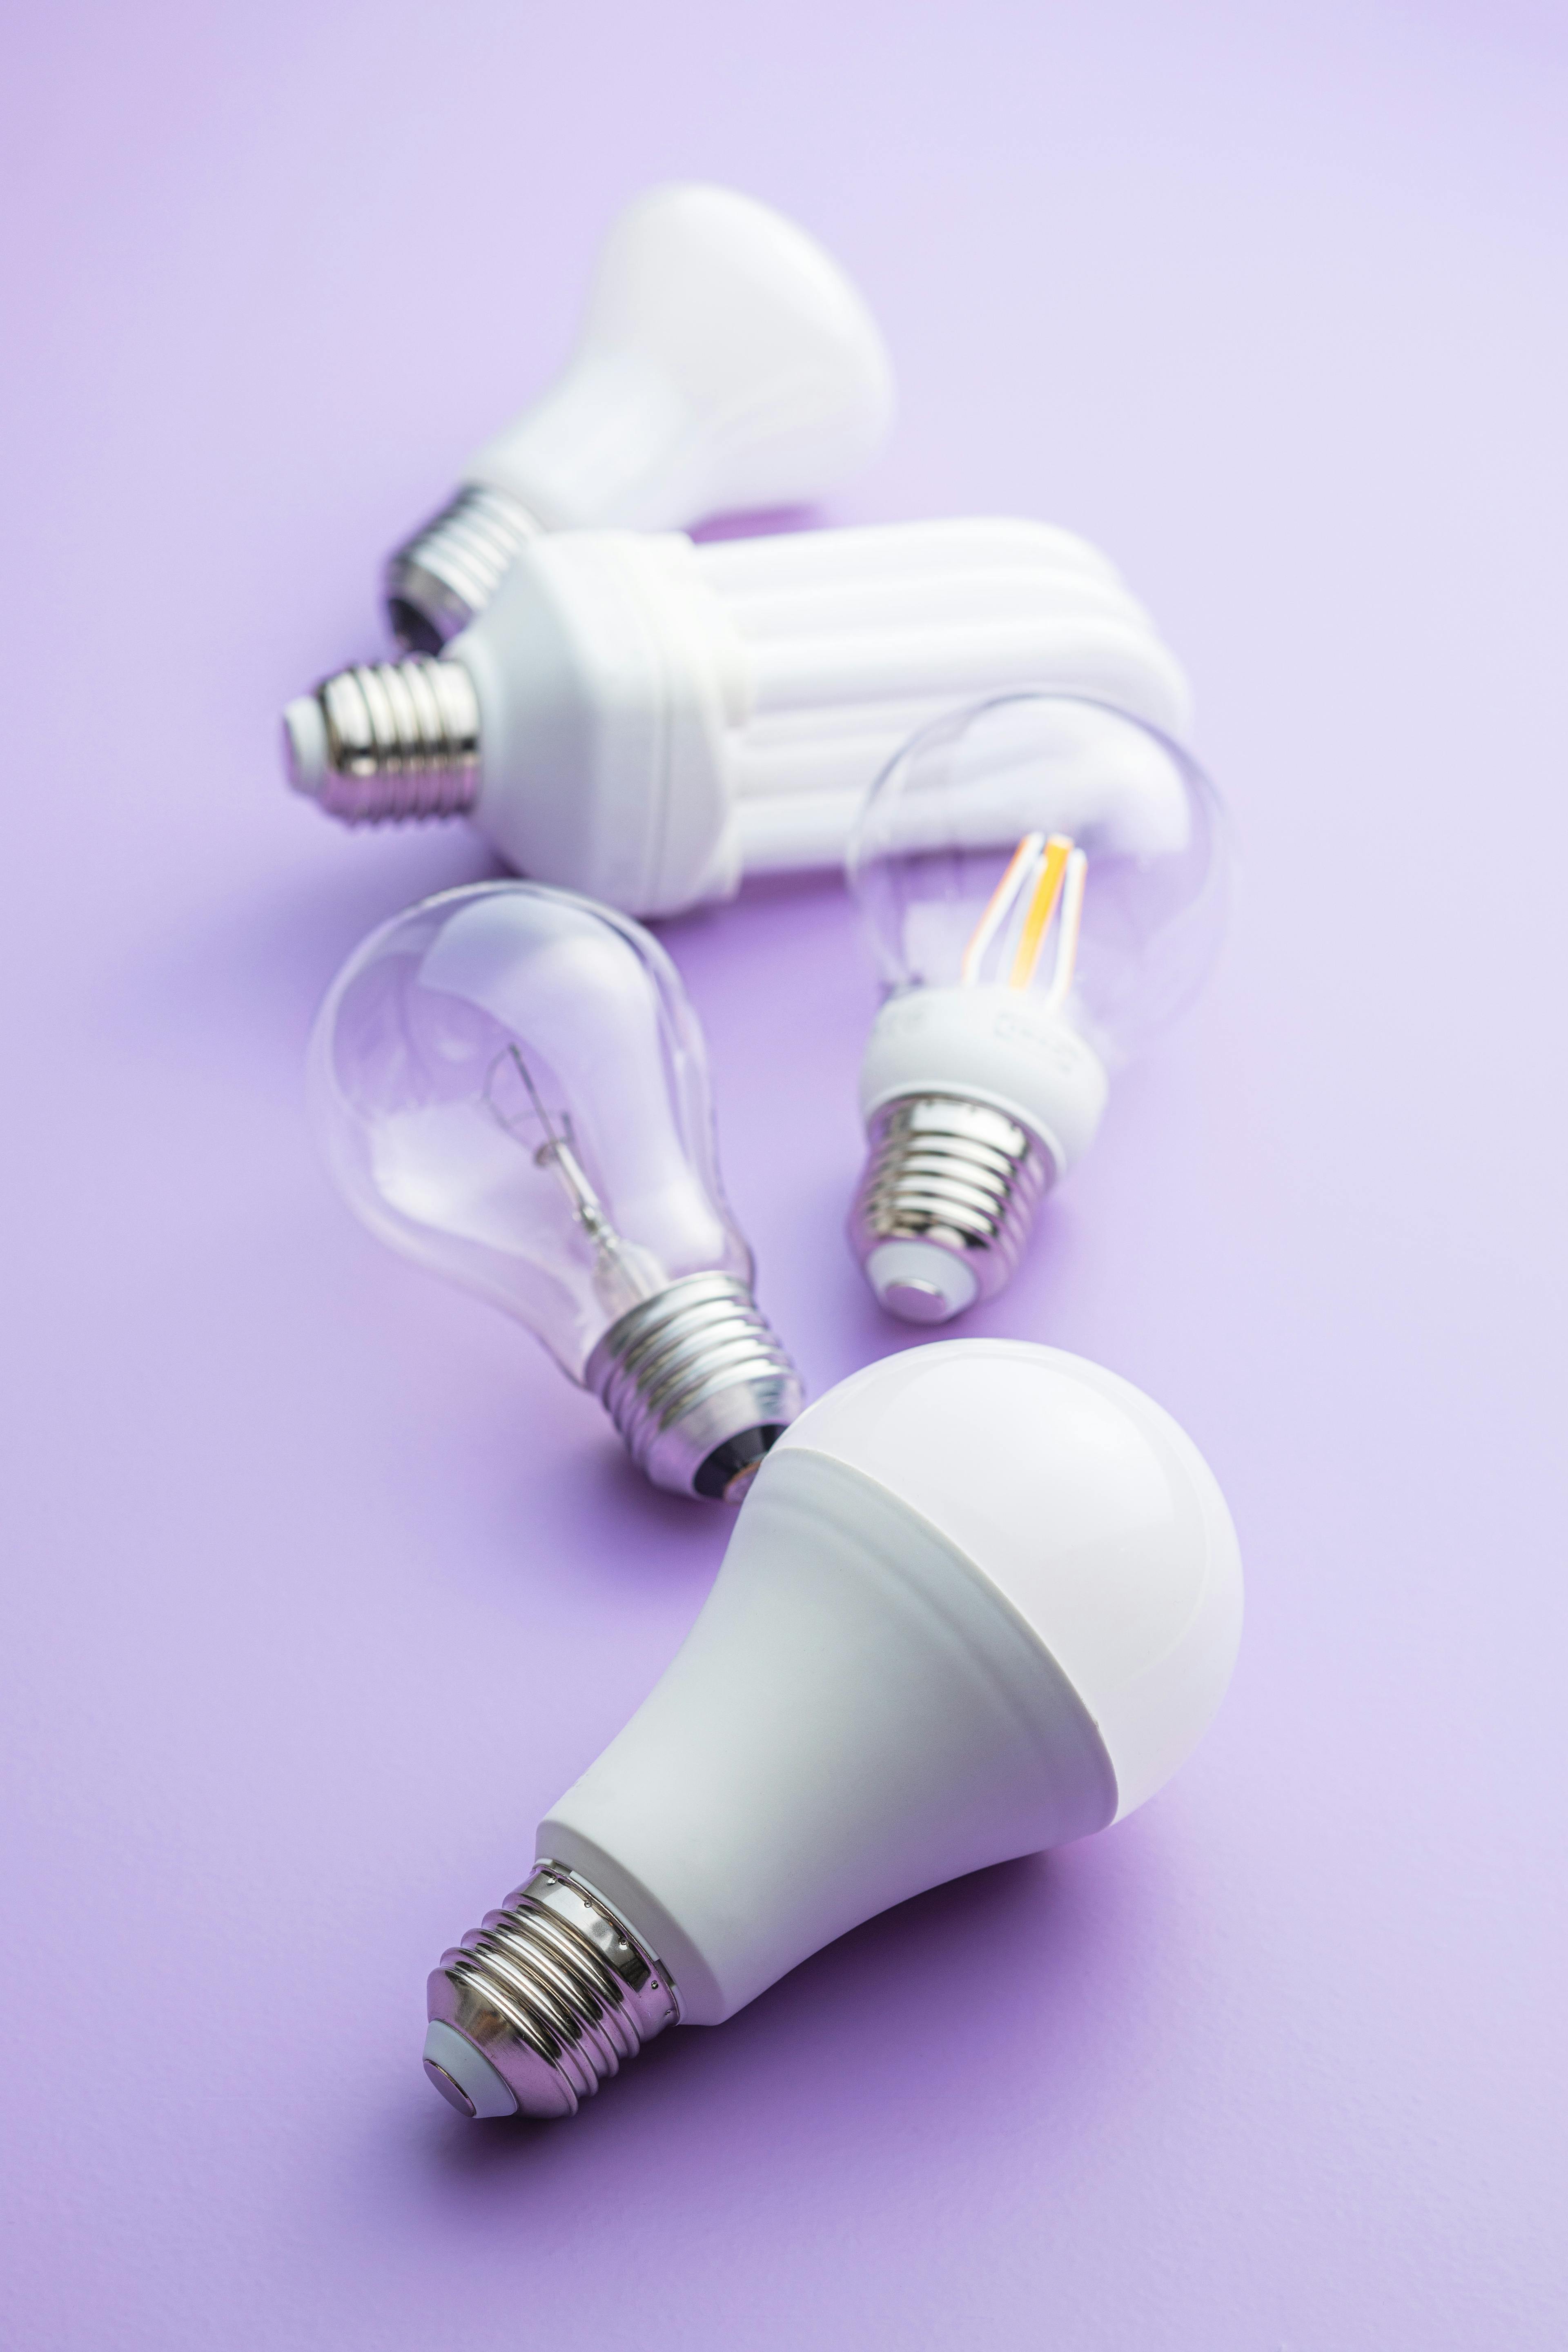 Energy saving light bulbs on purple background